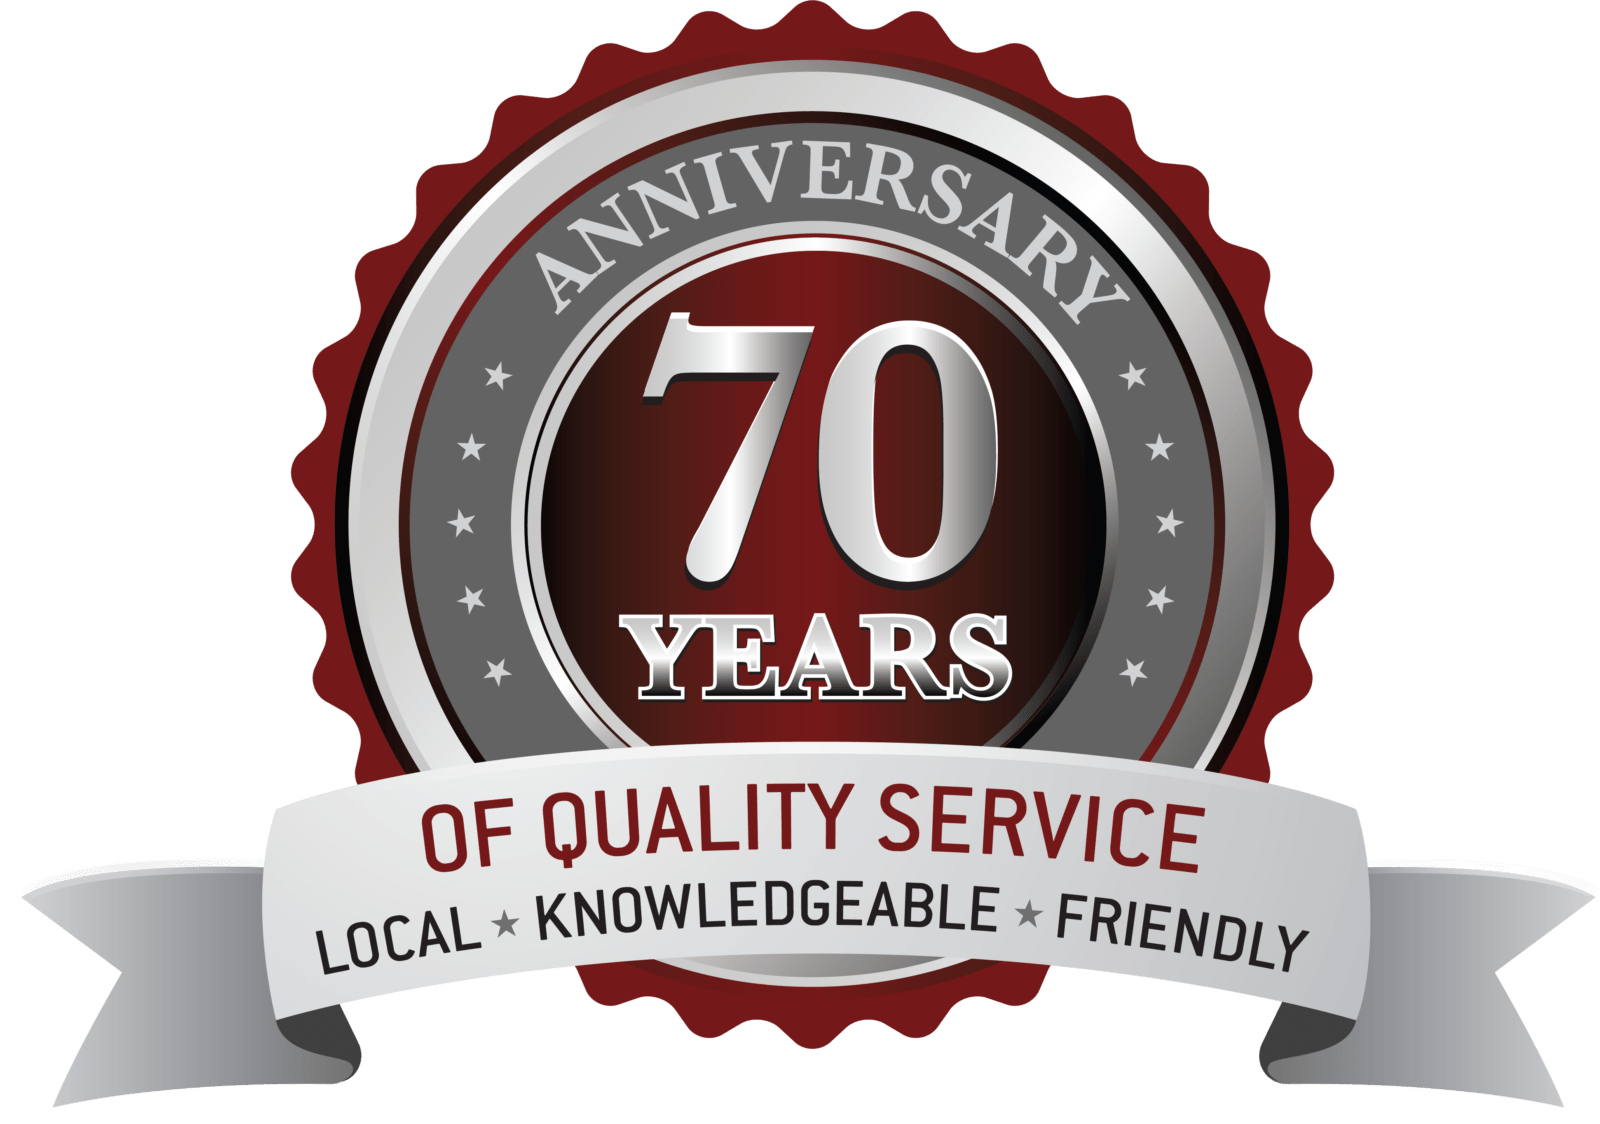 Anniversary 70 years | Lake Forest Flooring